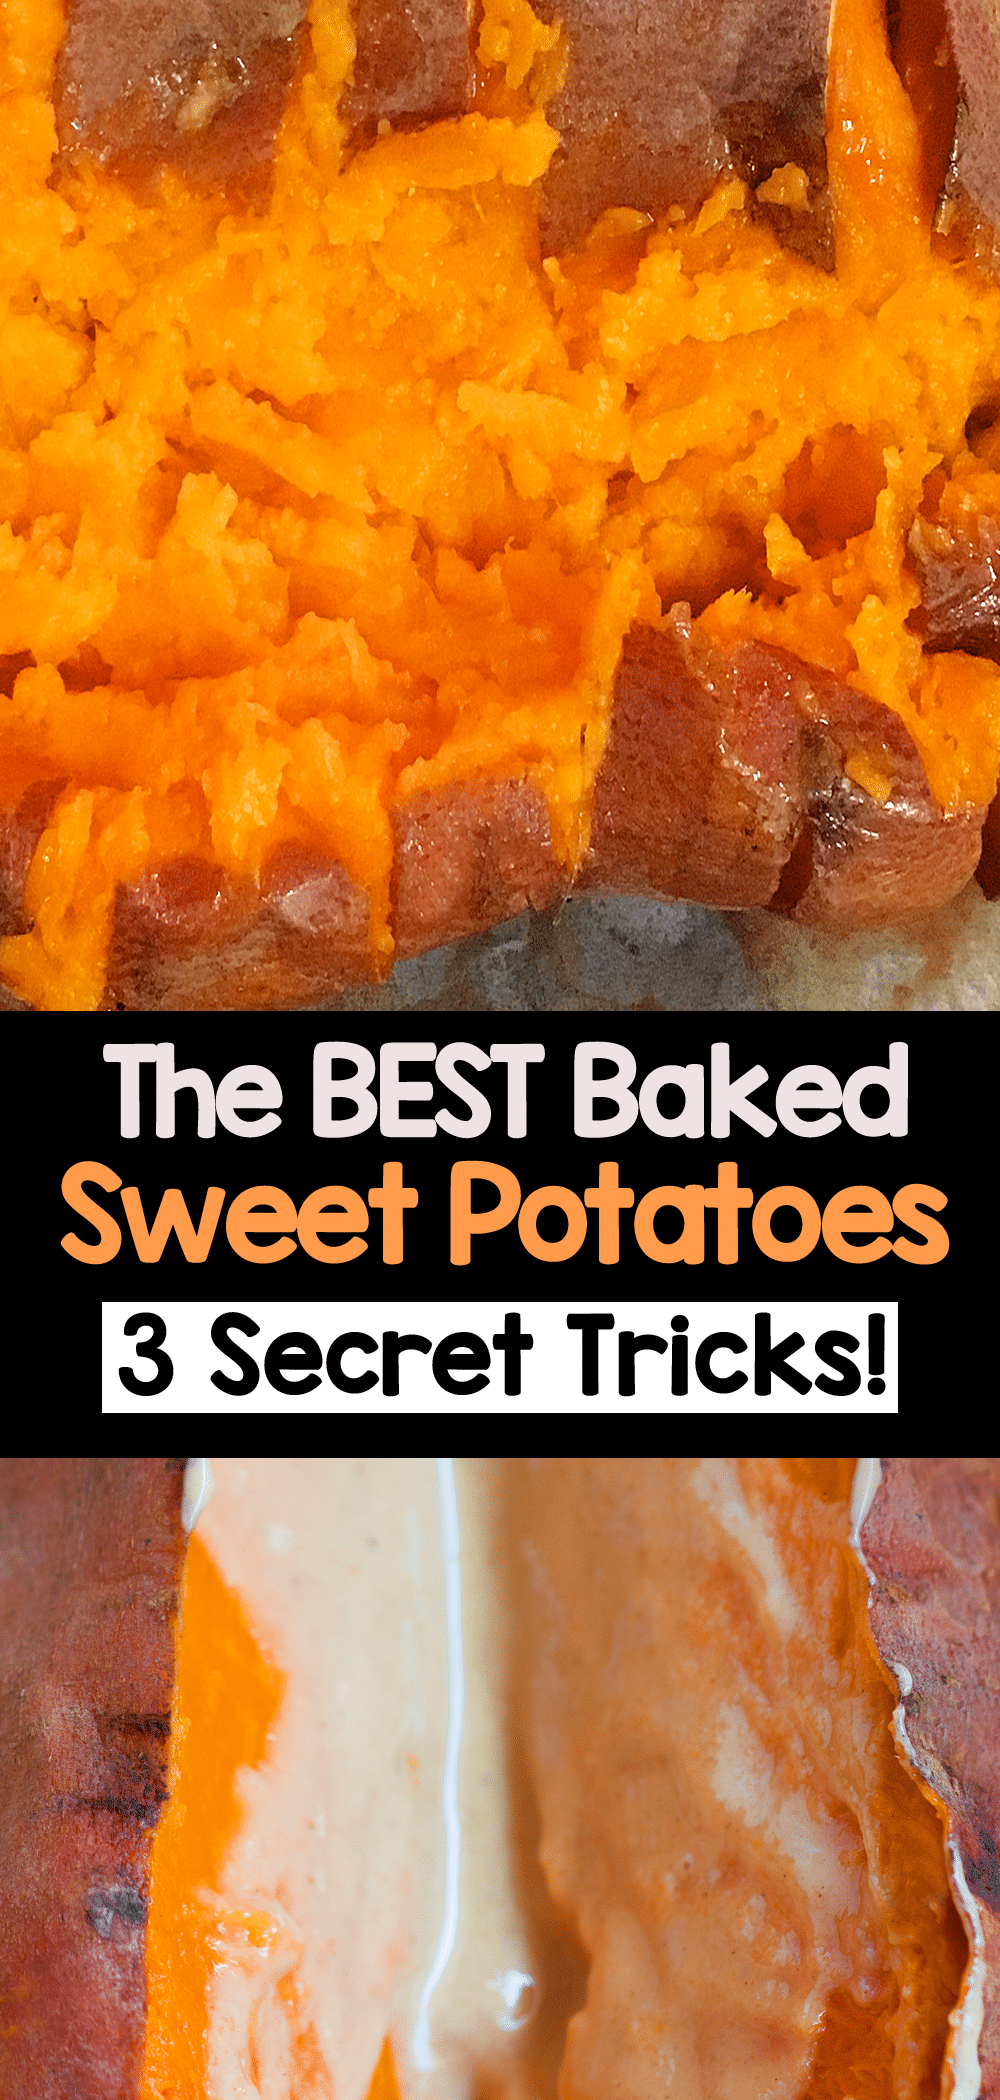 How To Cook Sweet Potatoes - The Three Secret Tricks!